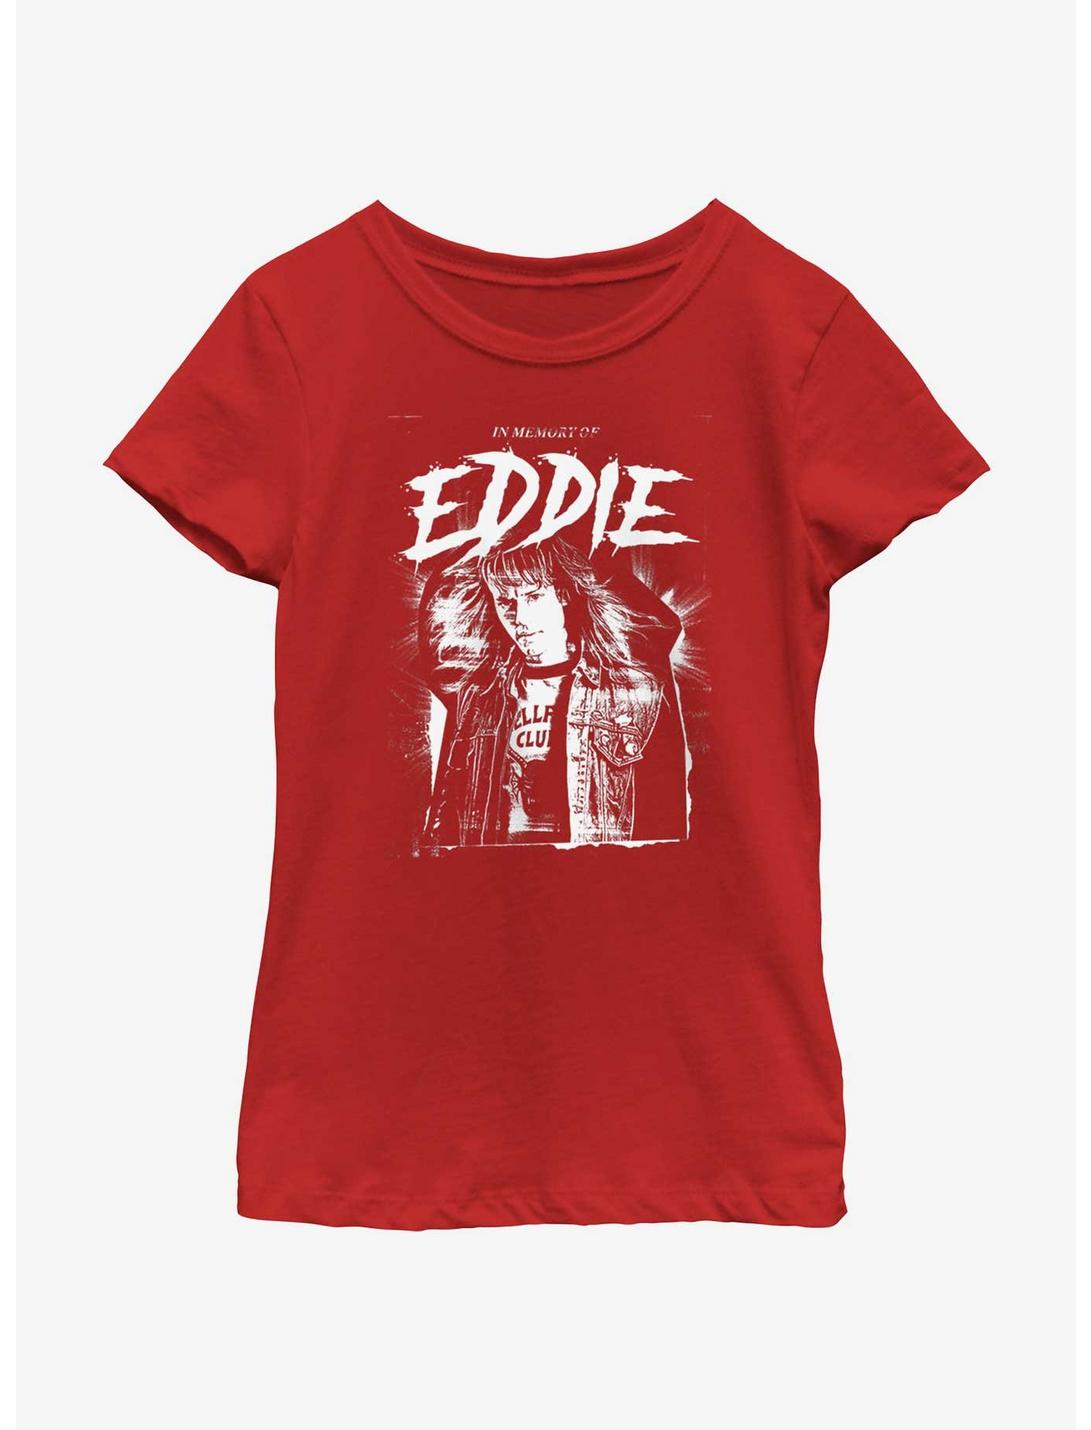 Stranger Things In Memory of Eddie Youth Girls T-Shirt, RED, hi-res